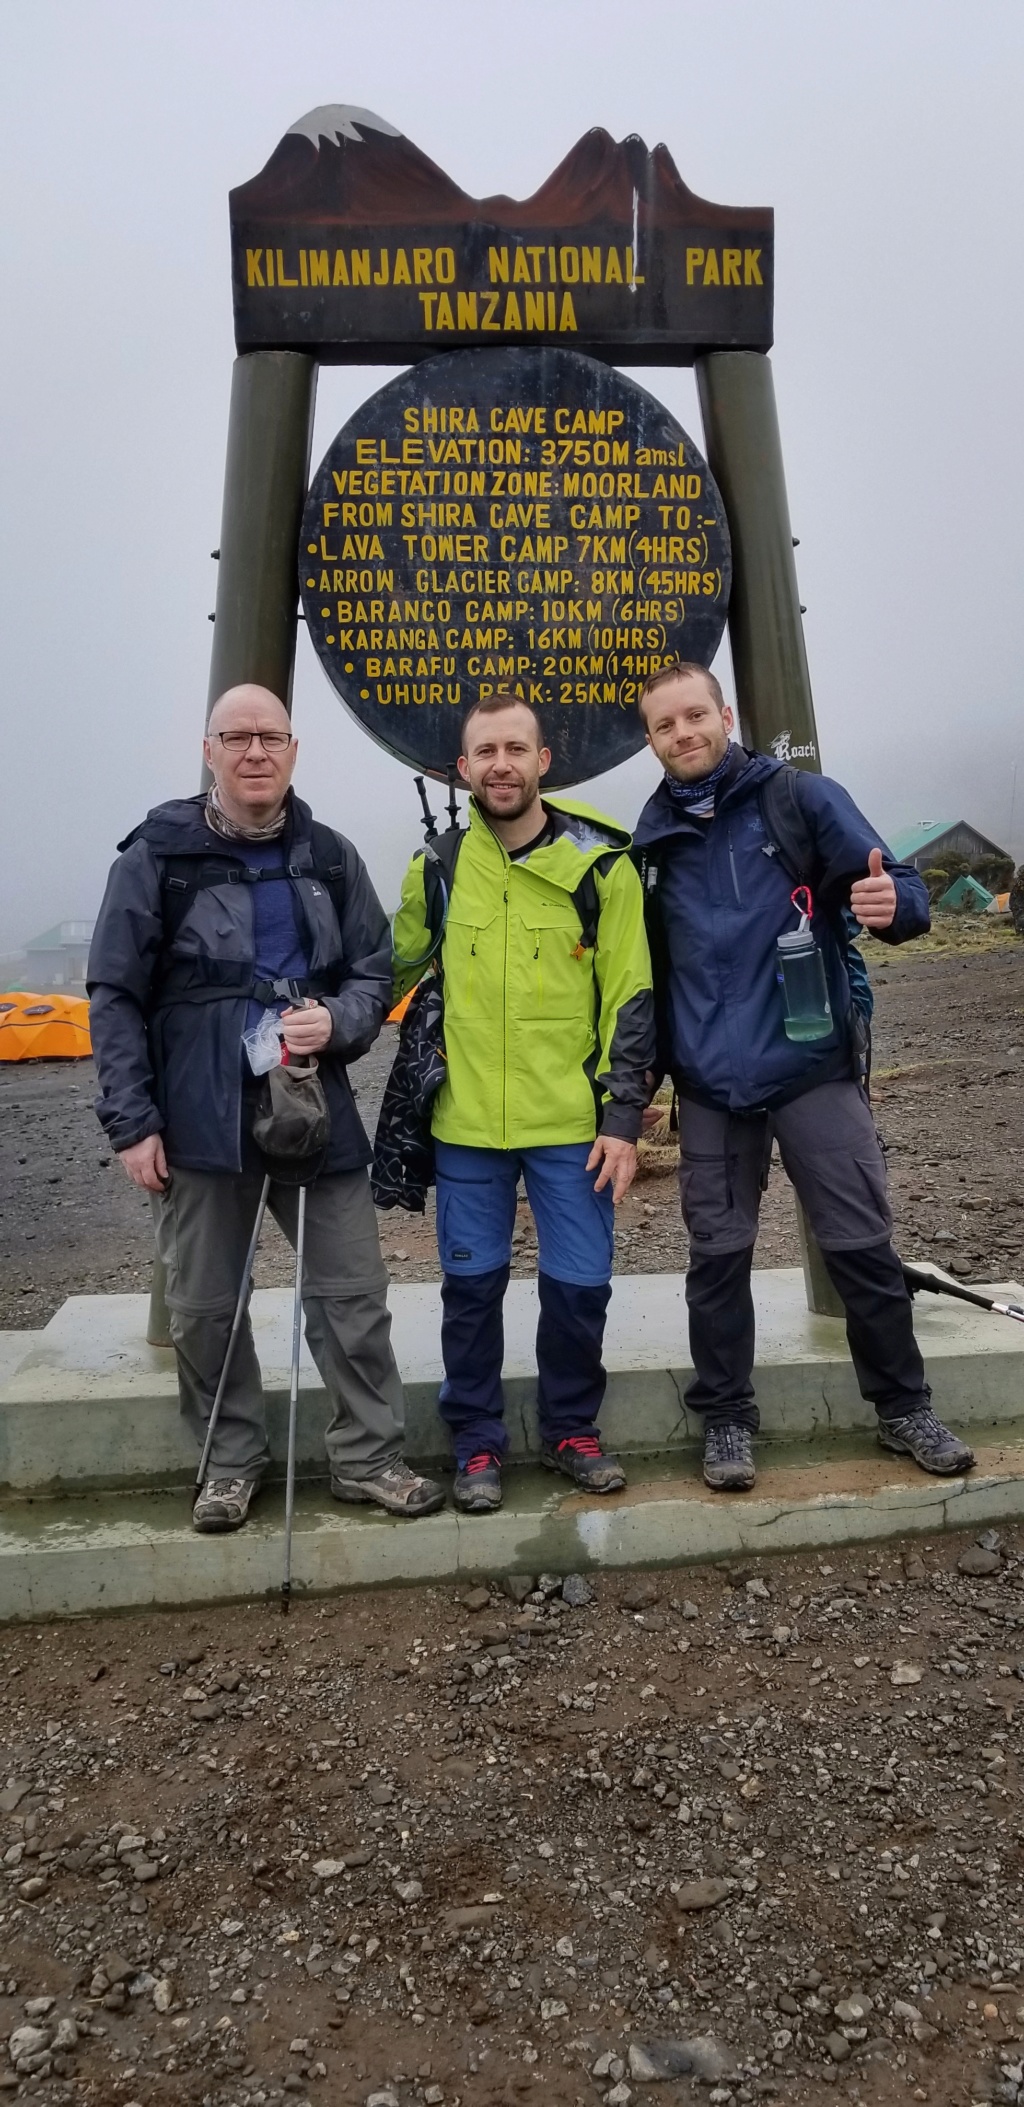 Montée du Kilimanjaro ^5895m 20181230